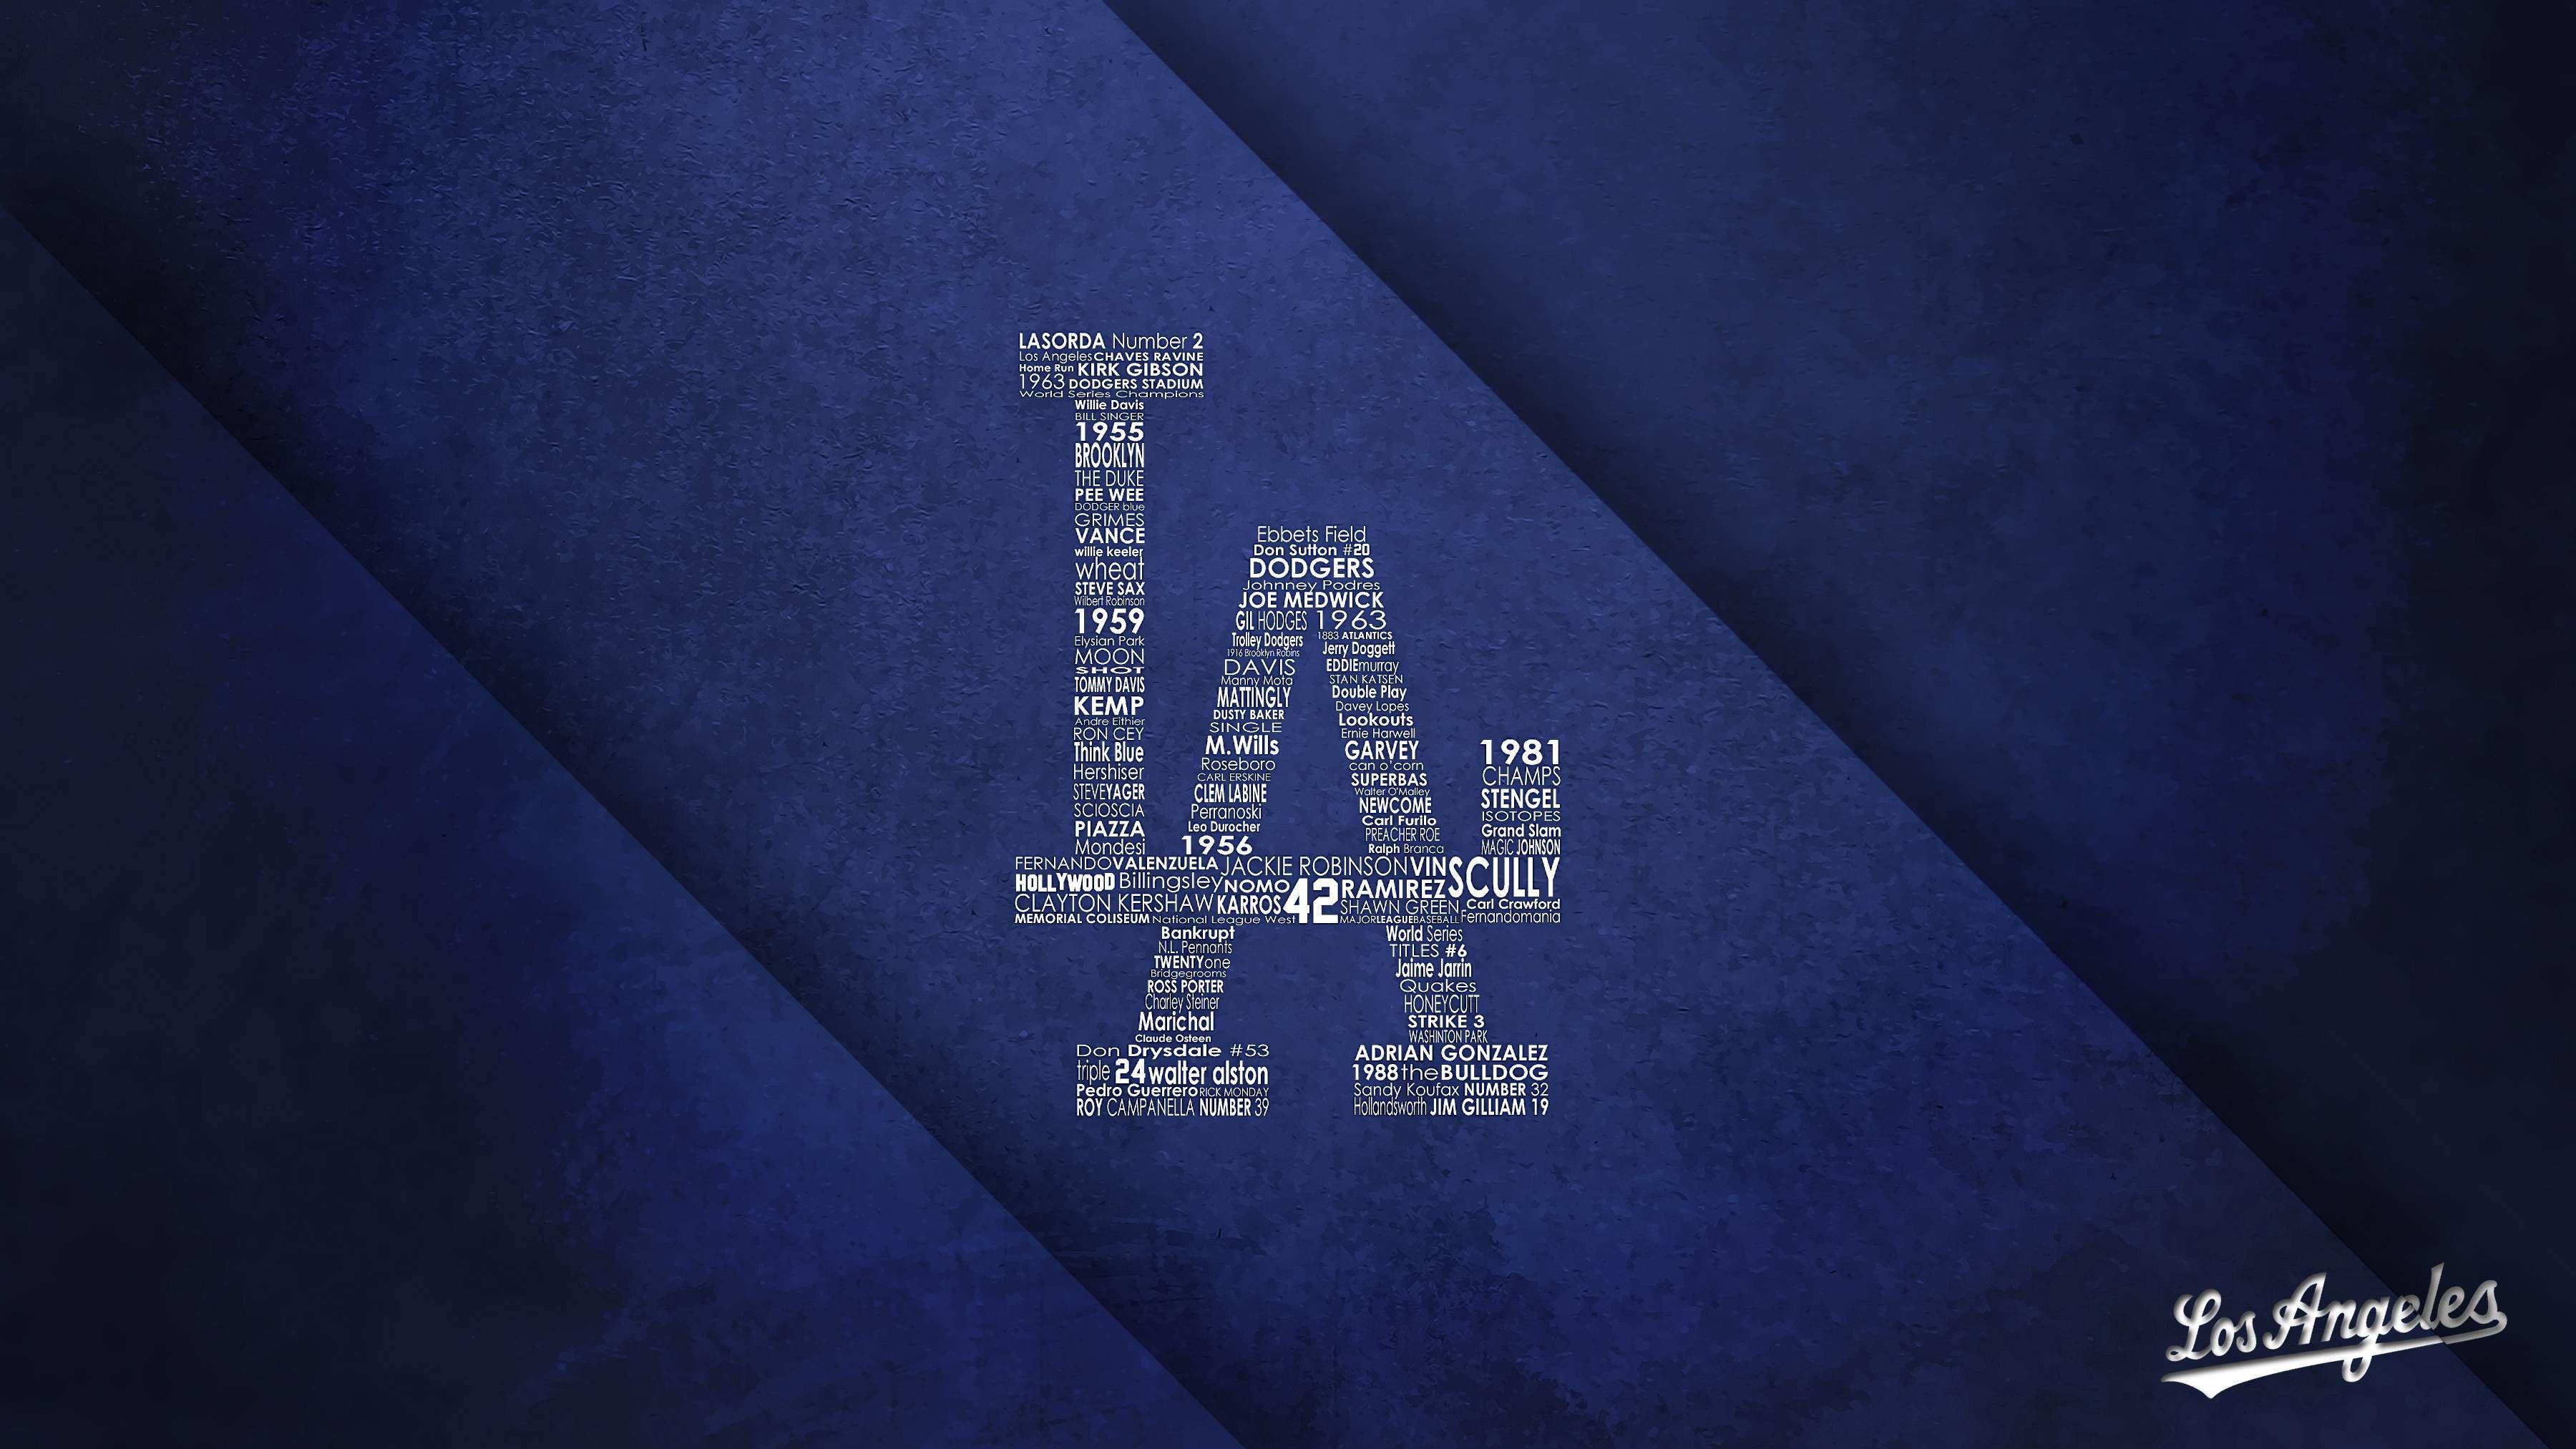 Los Angeles Dodgers Wallpaper 3 X 2025